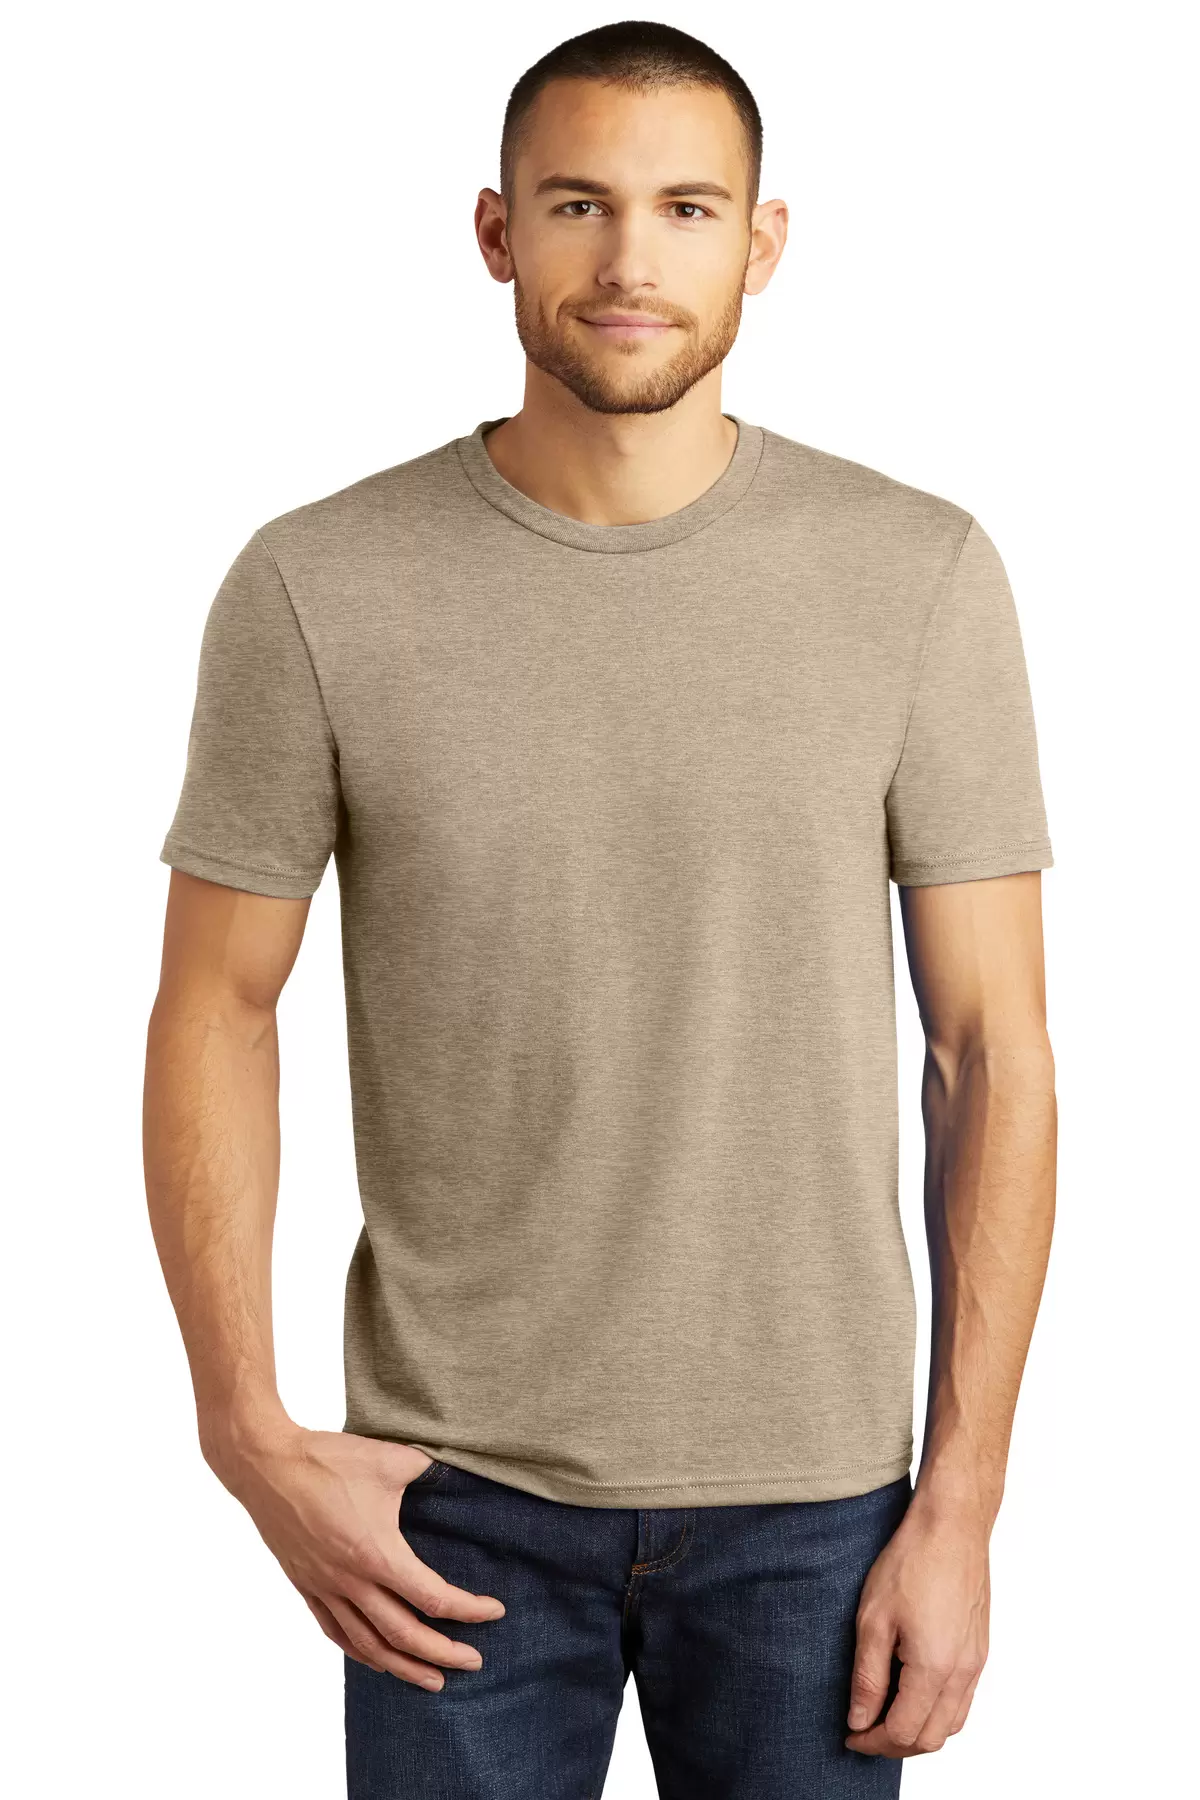 Tri Blend T Shirts, Wholesale Clothing, Tri Blend Hoodie